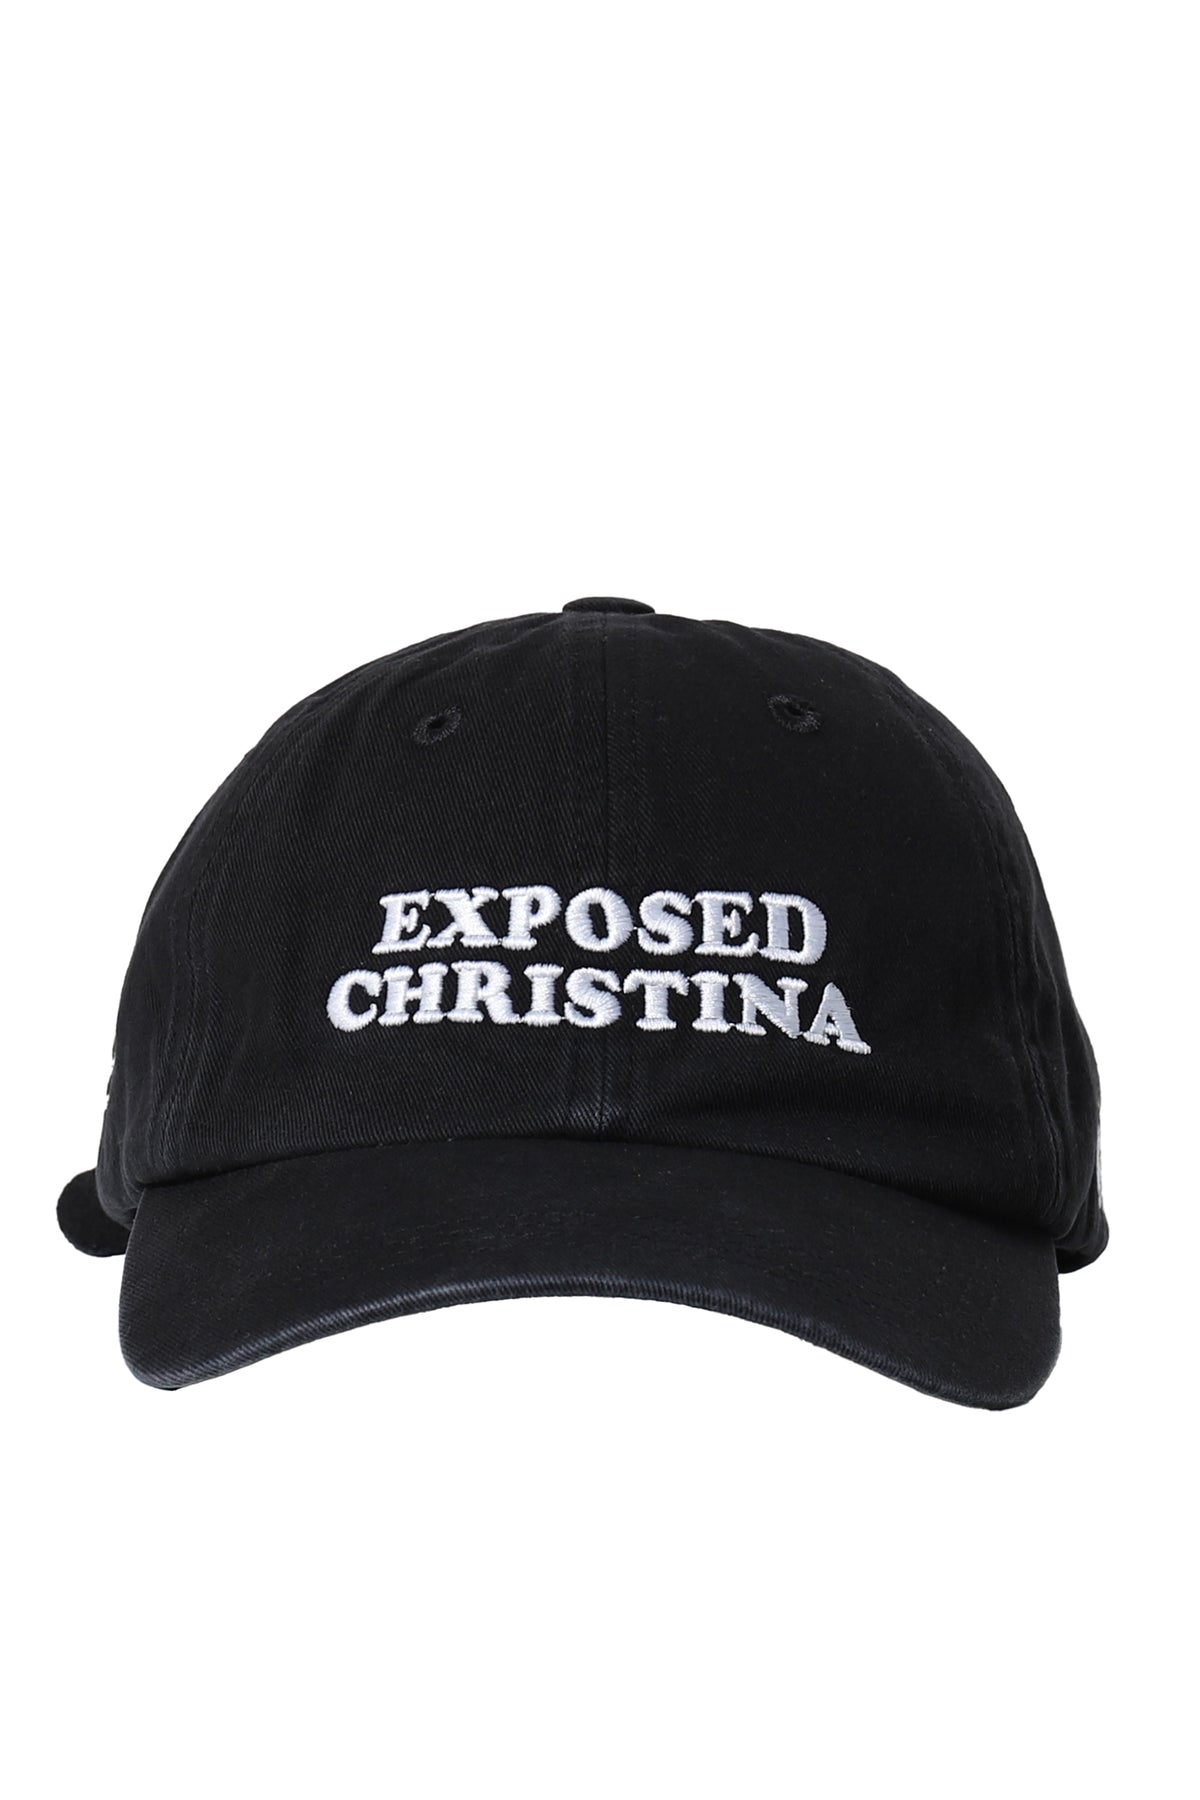 EXPOSED CHRISTINA 6-PANEL HAT / BLK